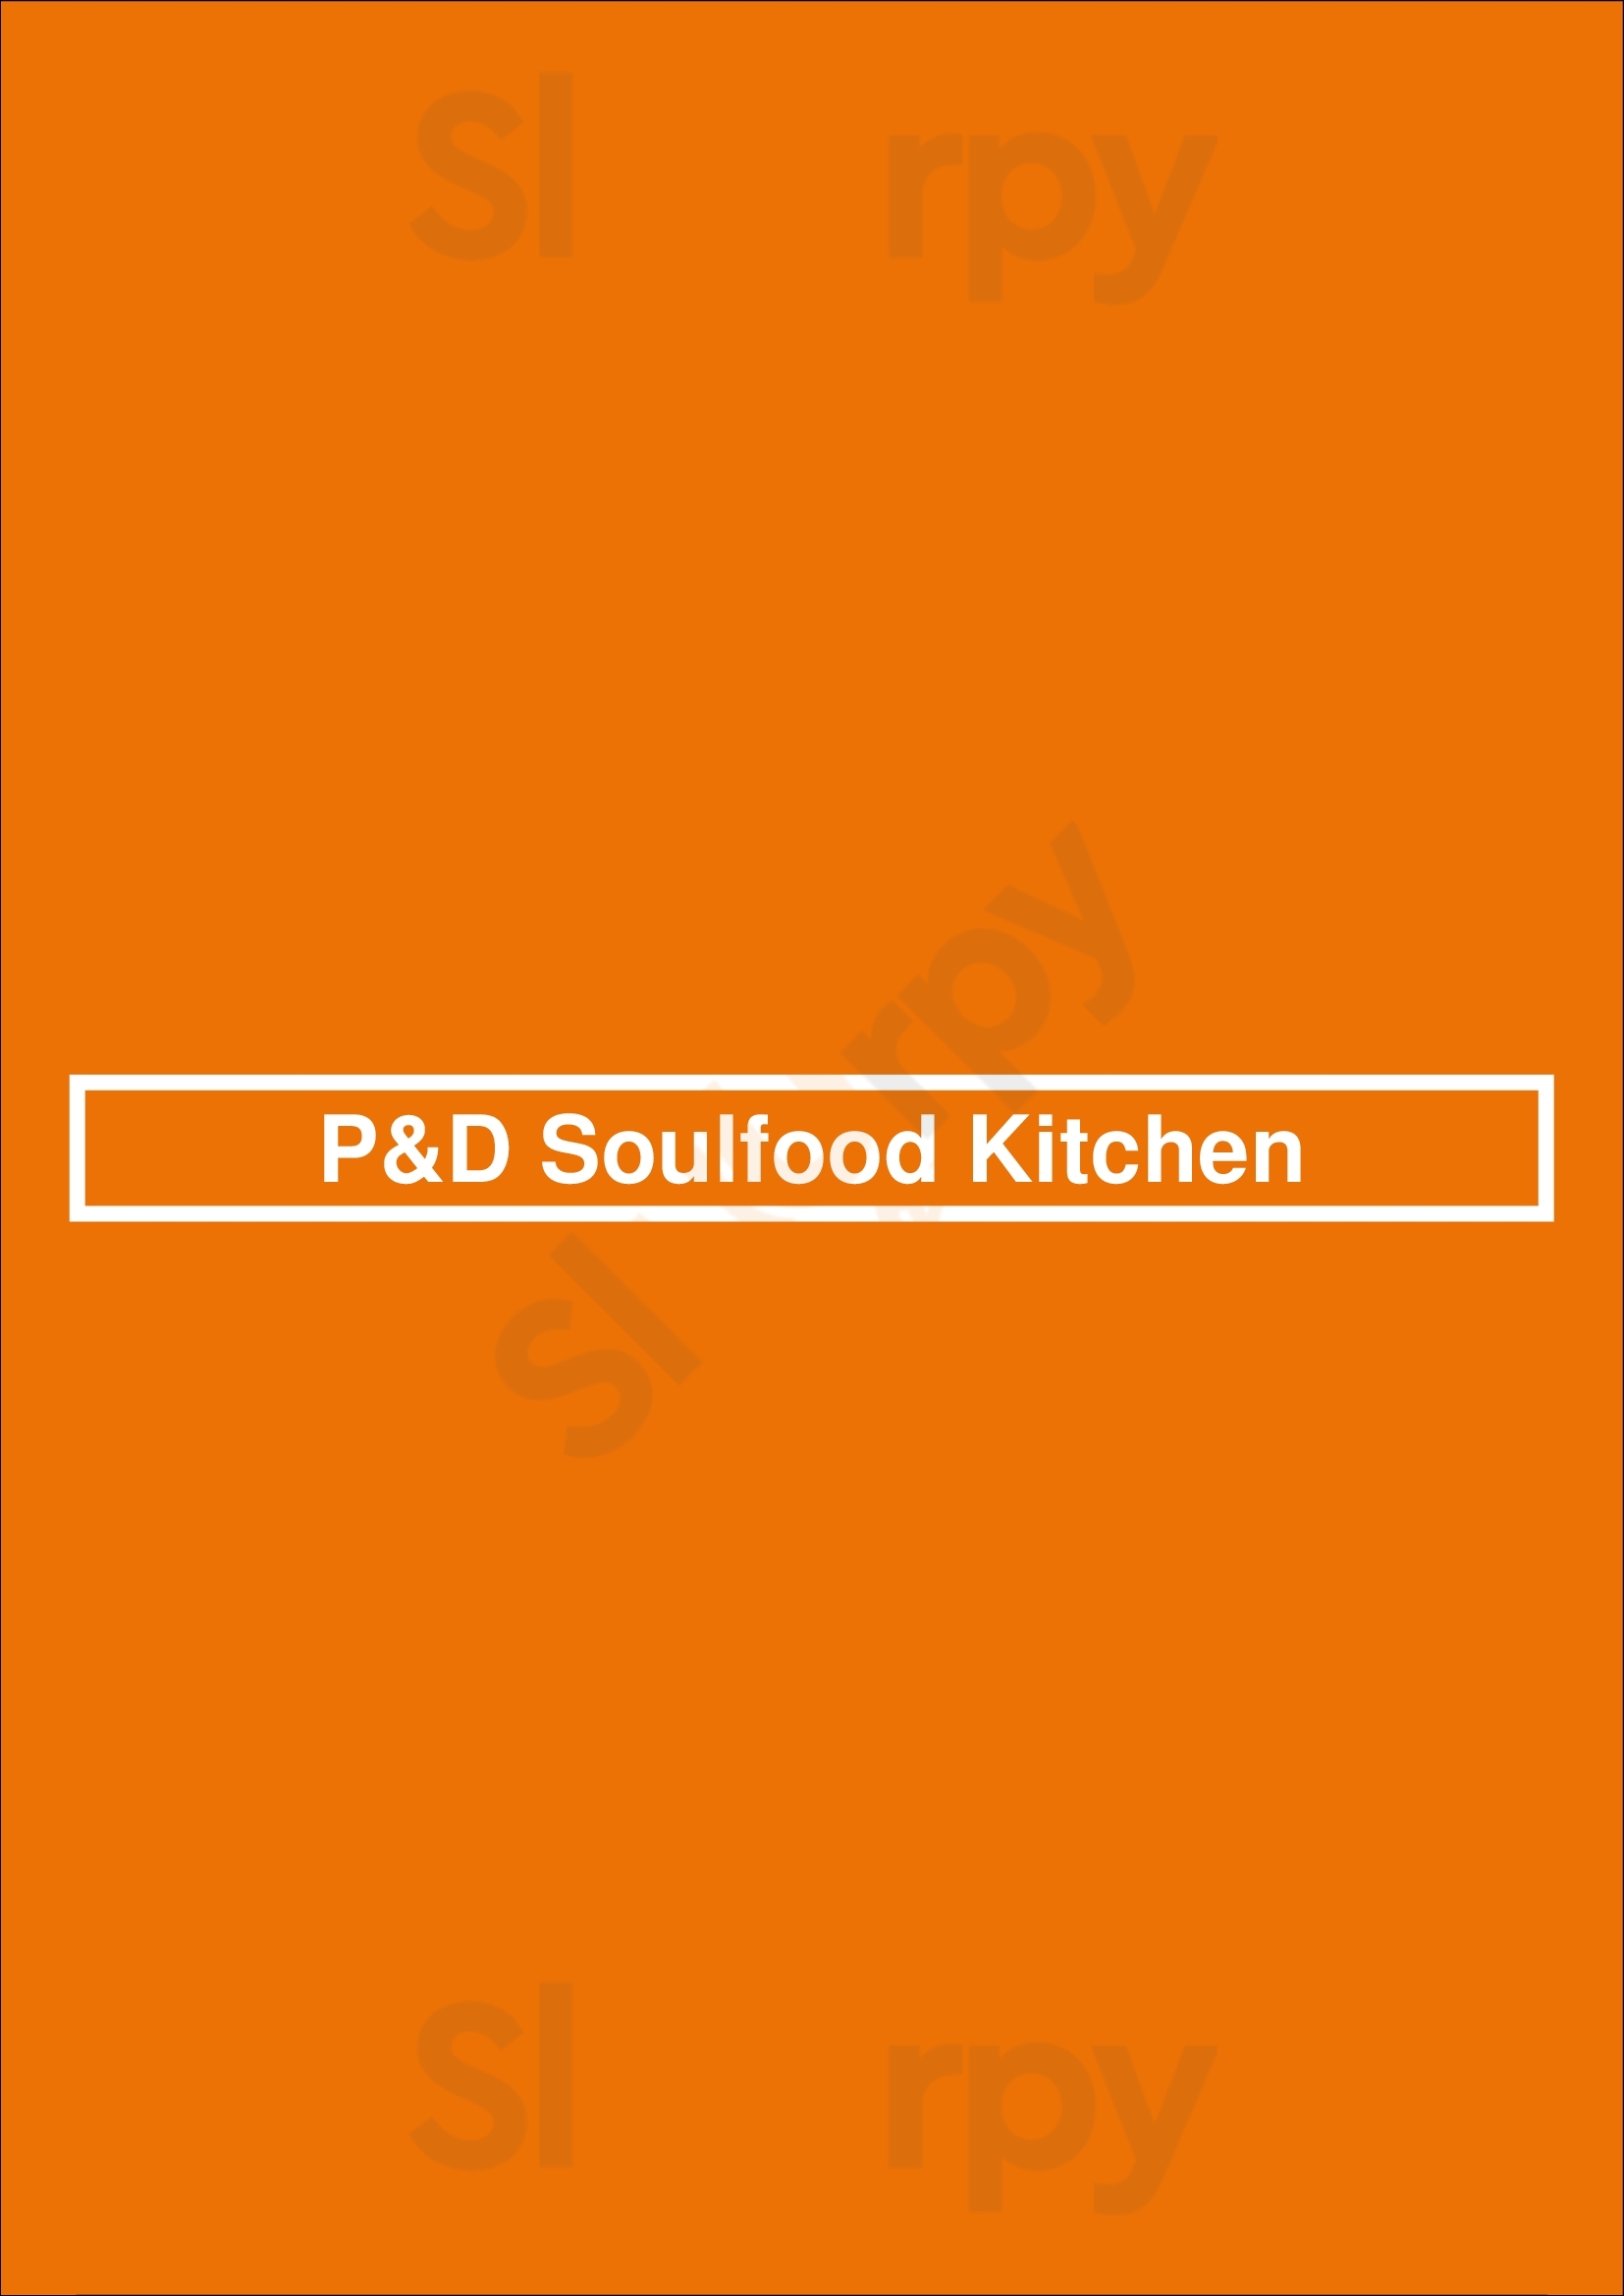 P&d Soulfood Kitchen Orlando Menu - 1